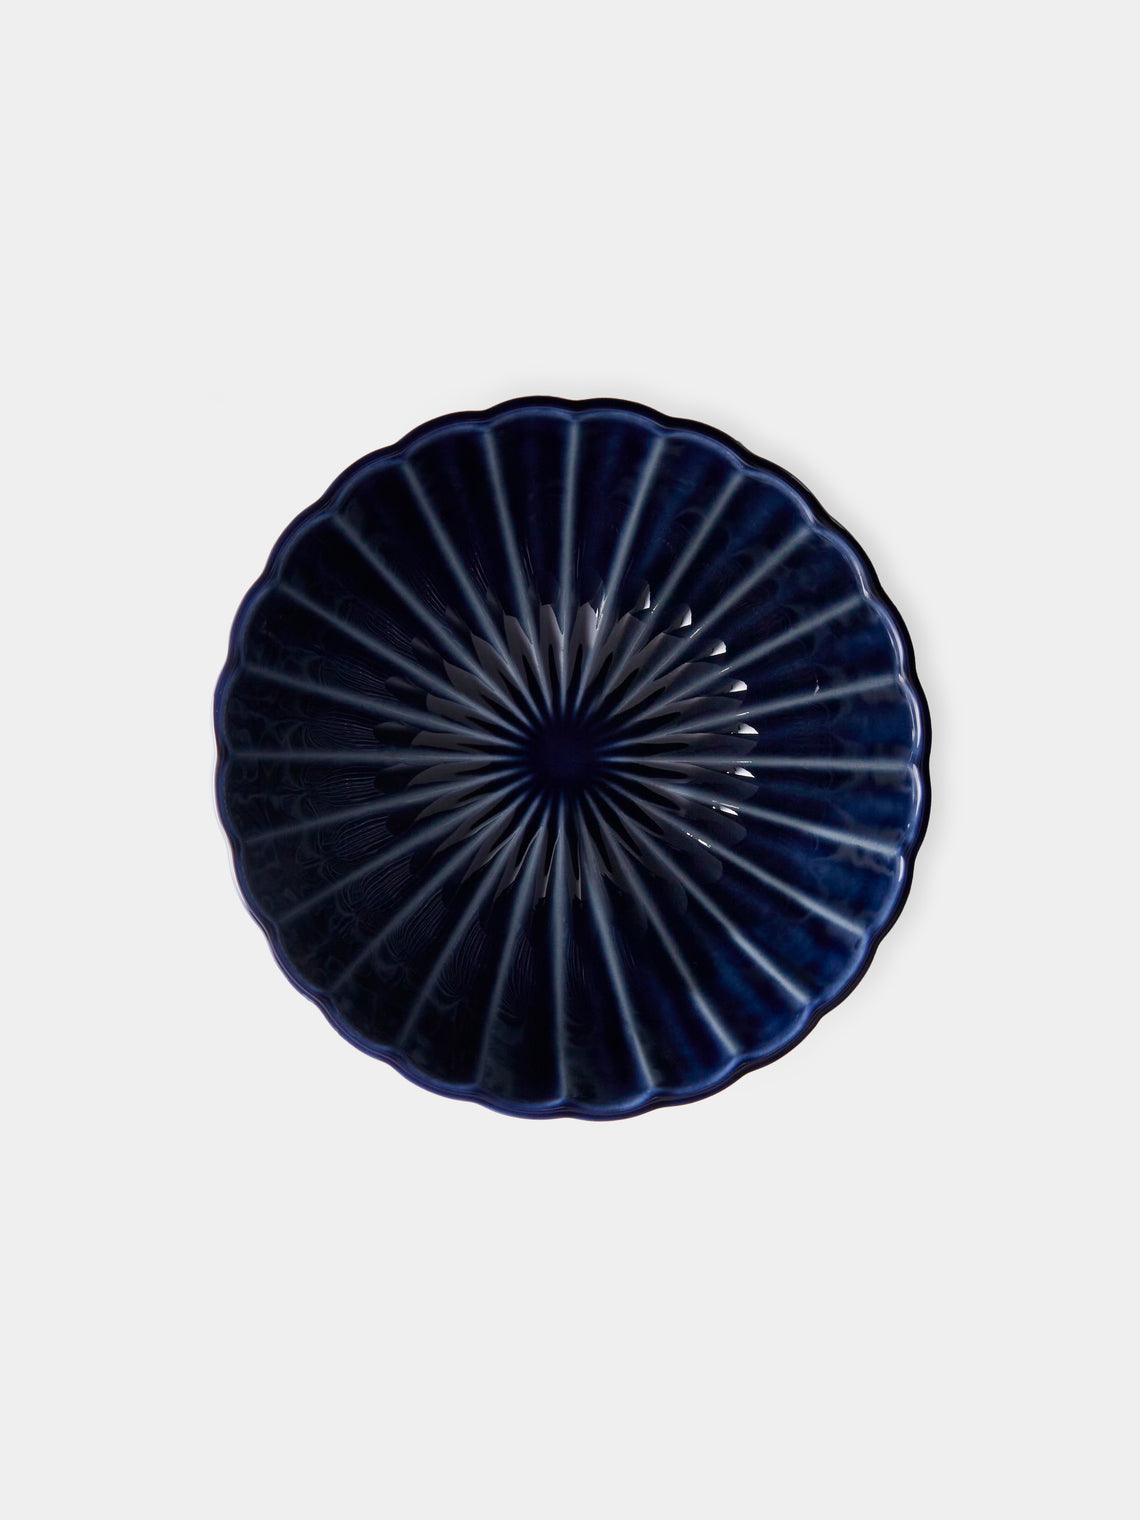 Kaneko Kohyo - Giyaman Urushi Ceramic Bowls (Set of 4) - Blue - ABASK